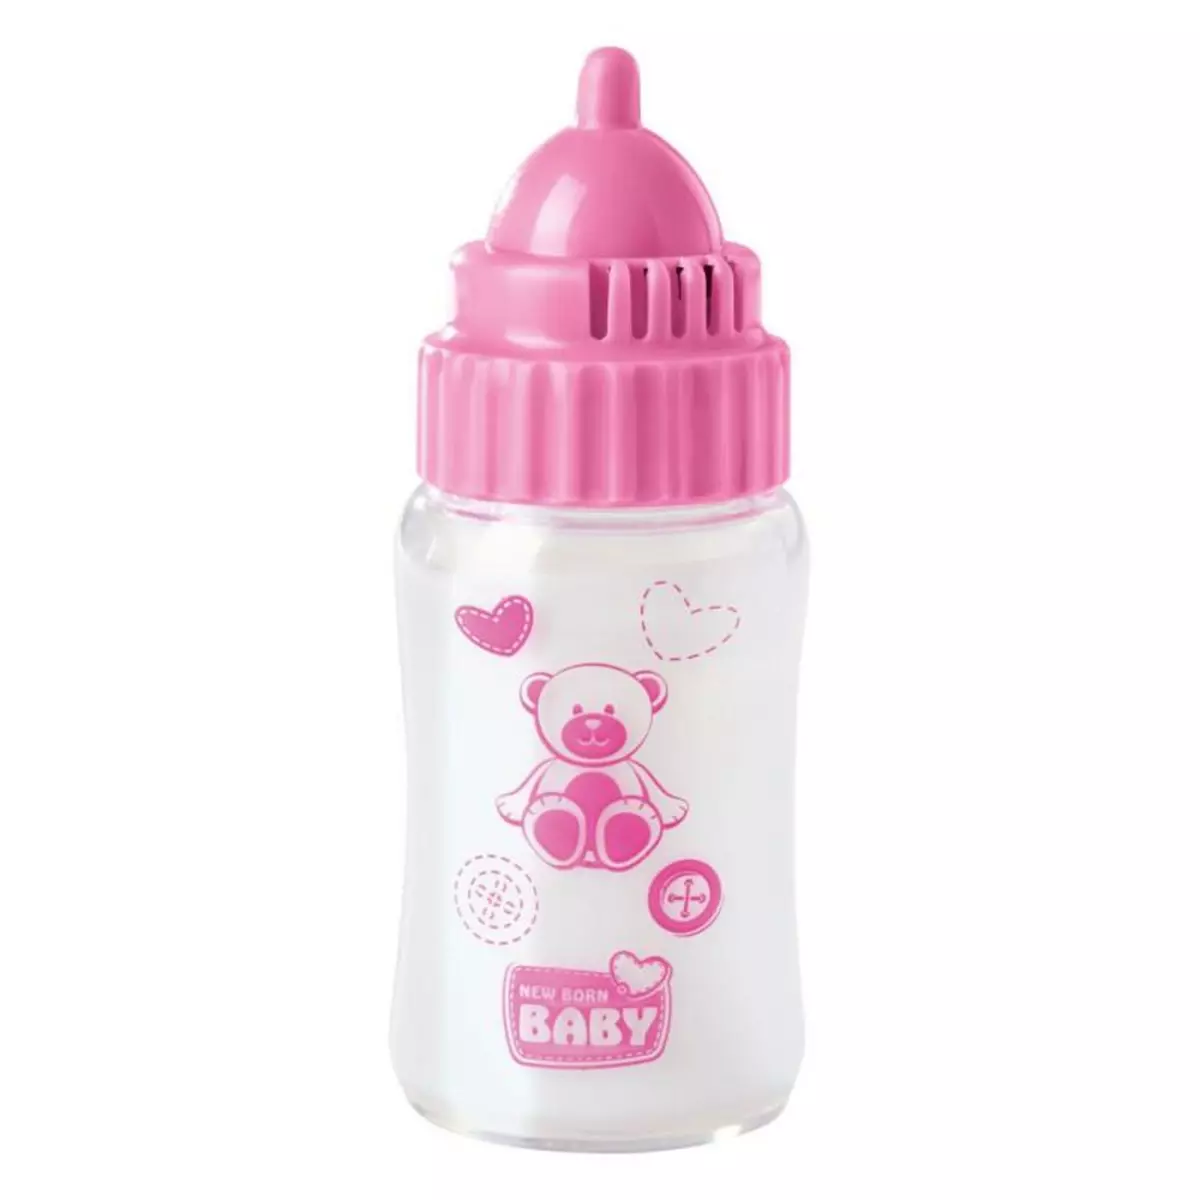 NEW BORN BABY New Born Baby Magic Drinking Bottle 105560009